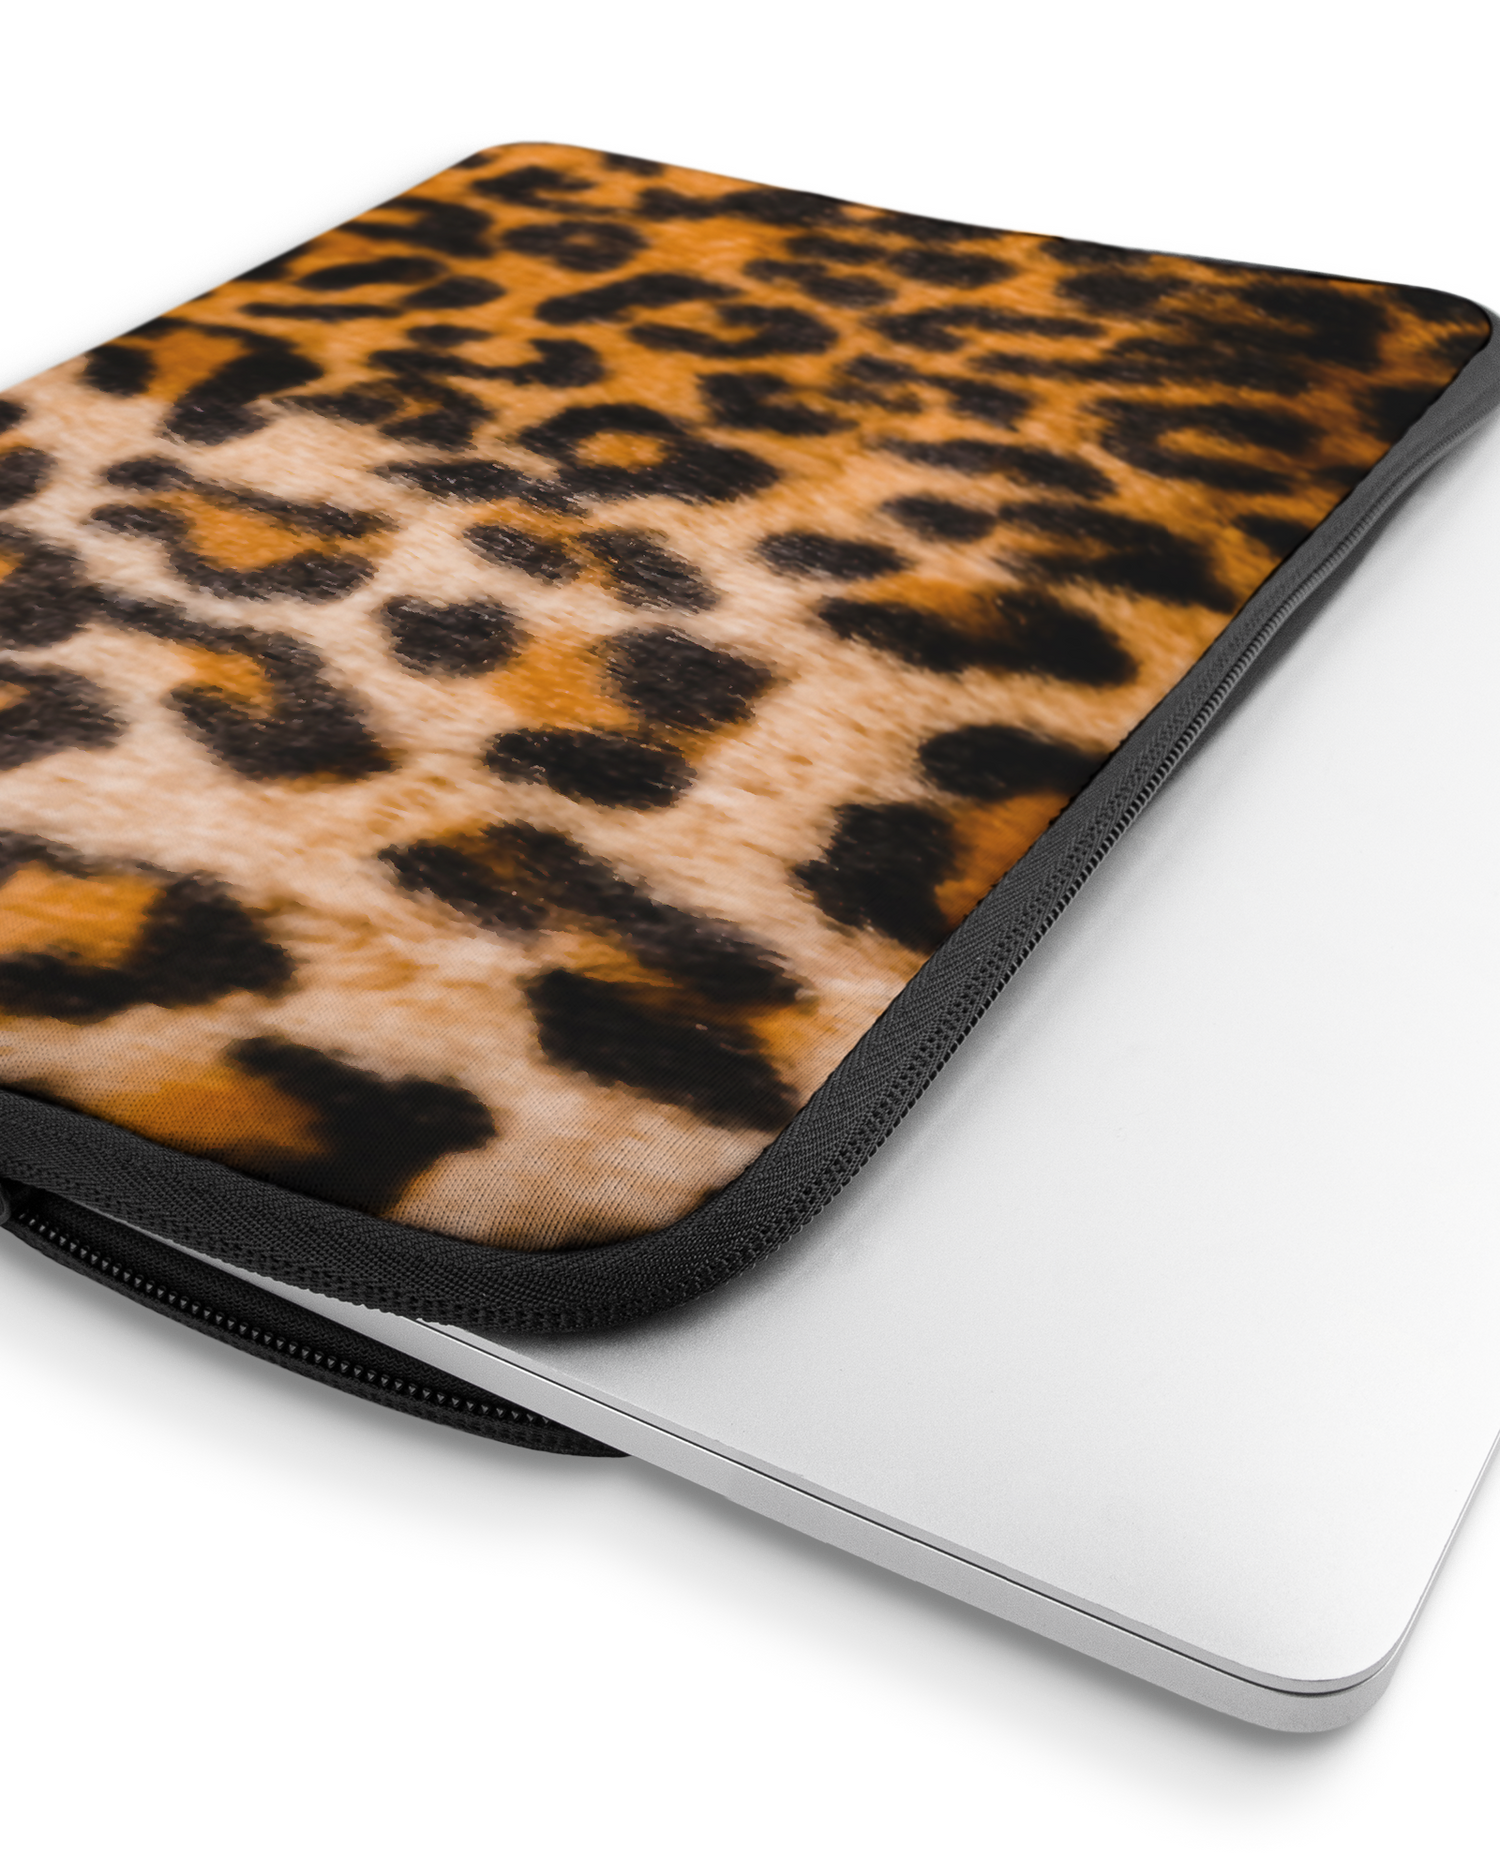 Leopard Pattern Laptophülle 16 Zoll mit Gerät im Inneren